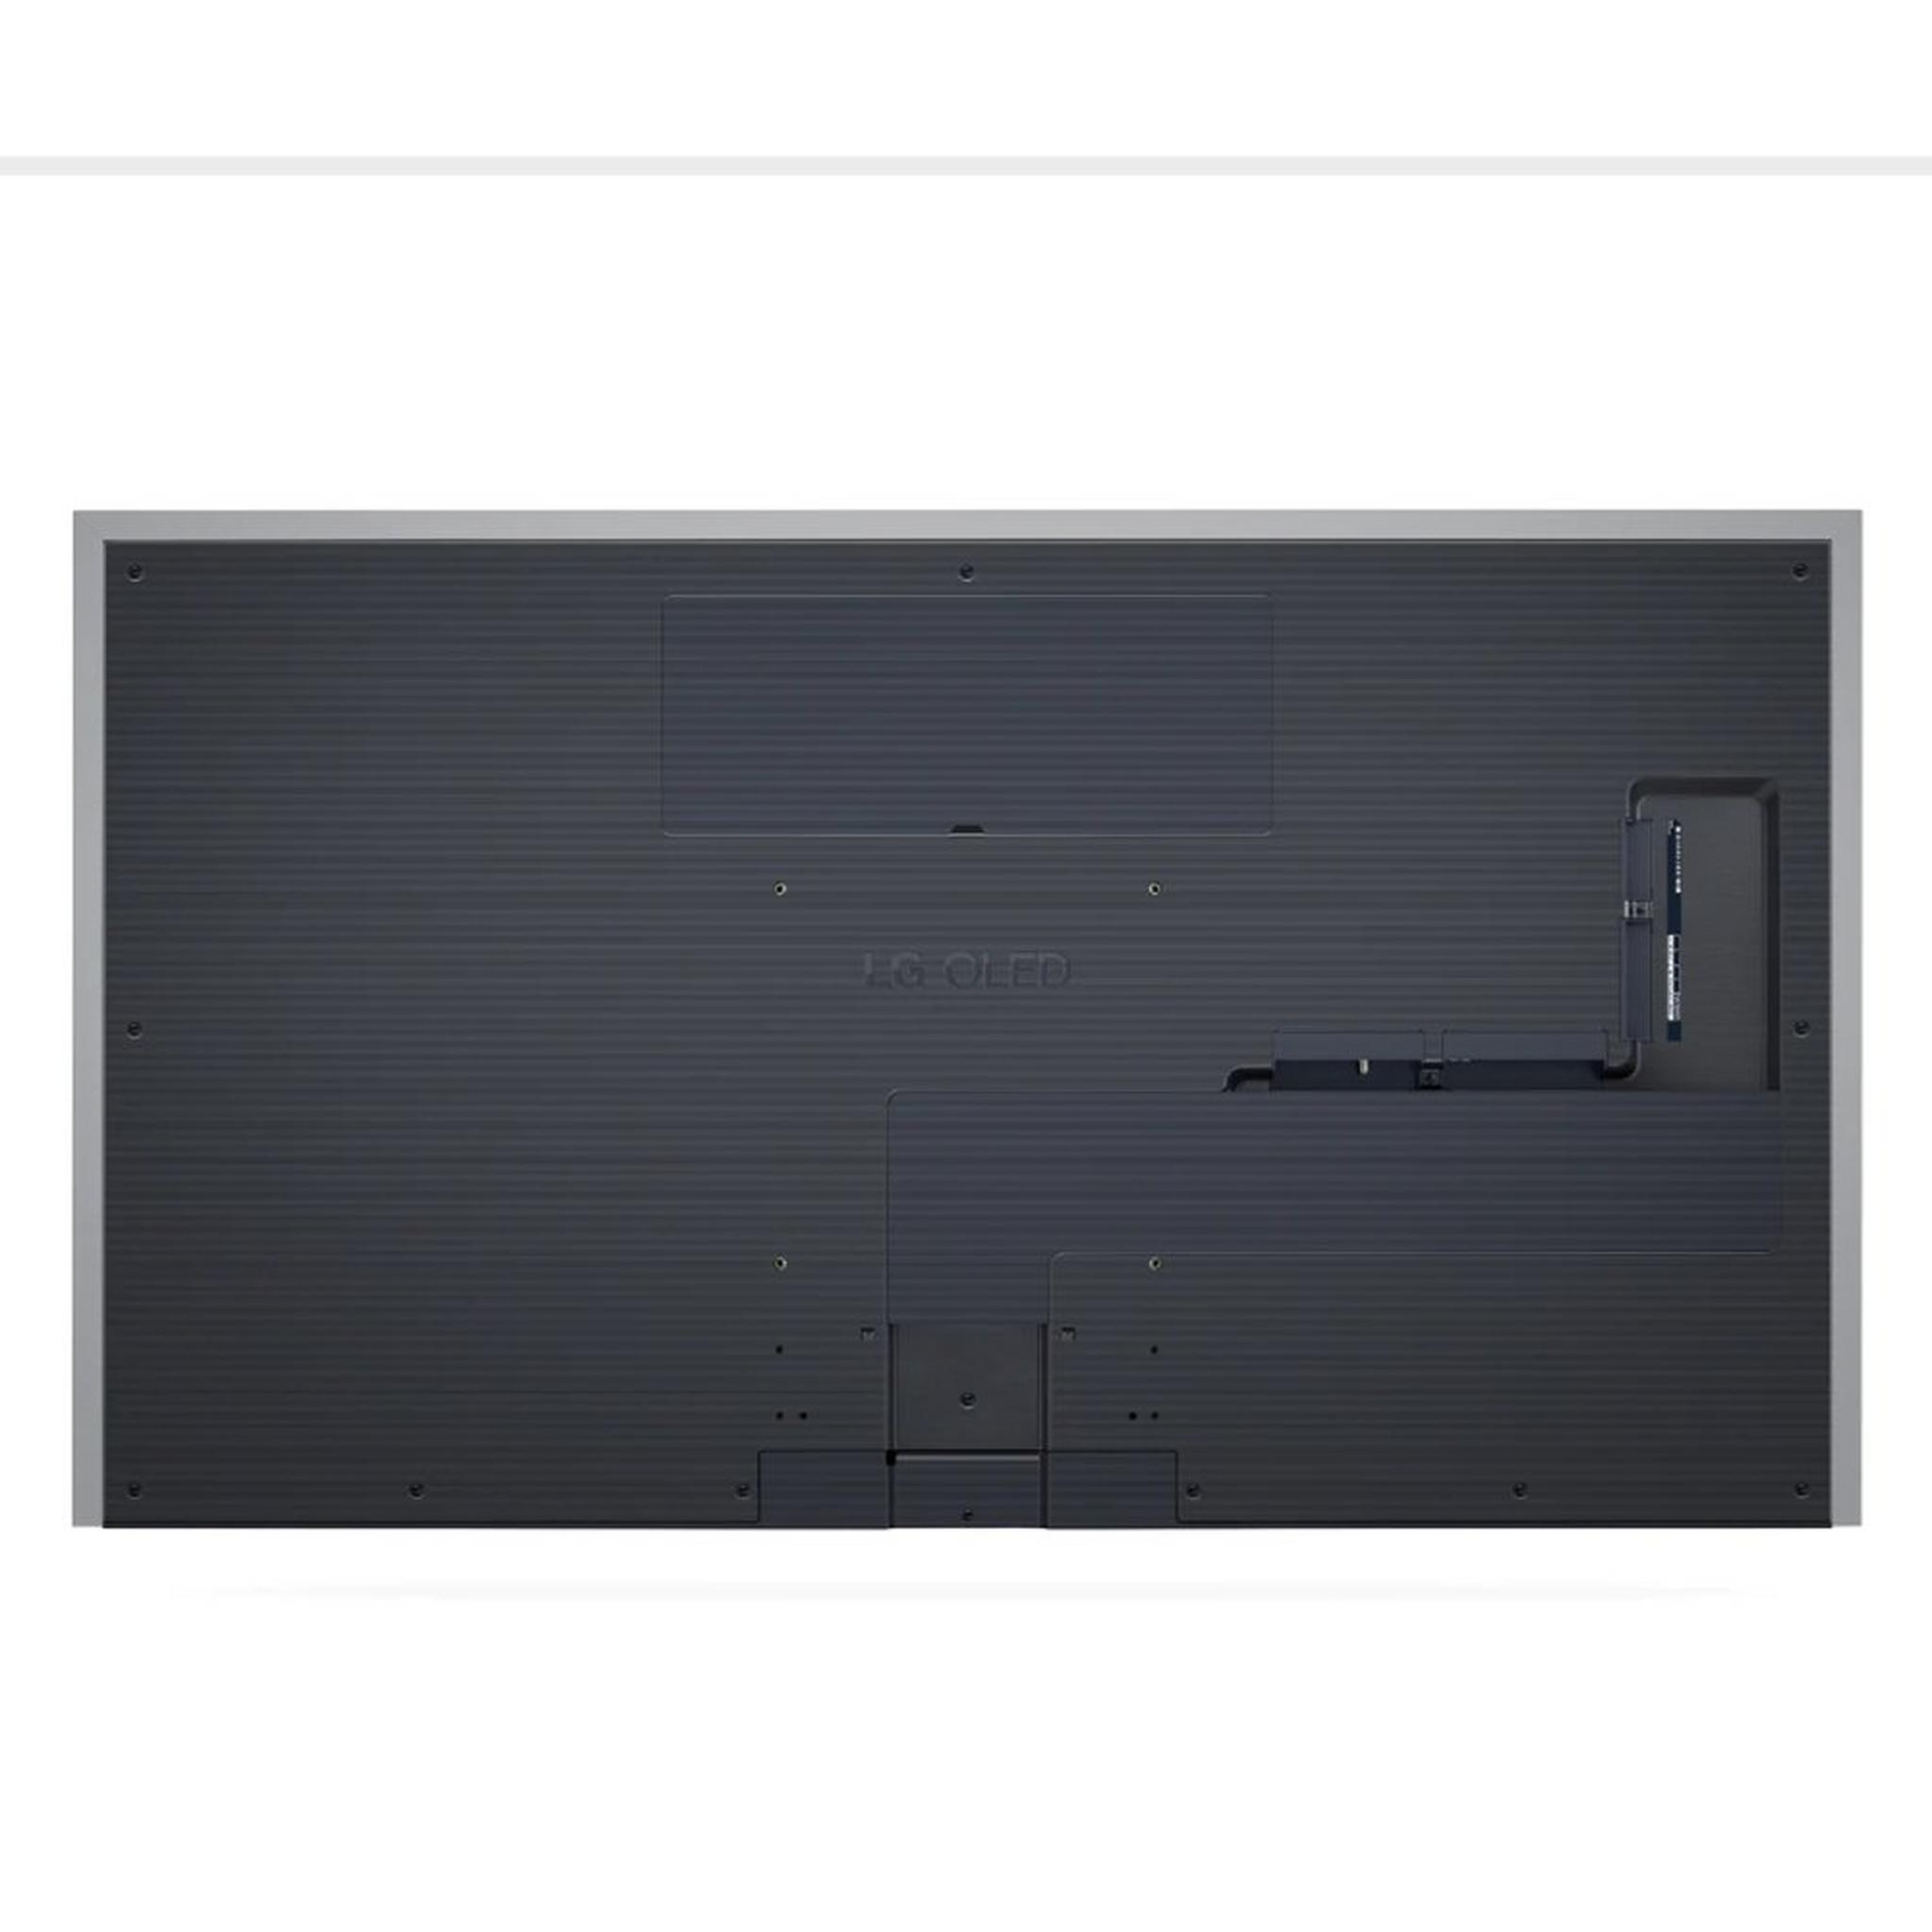 LG Evo G2 65-Inch 4K OLED Smart TV, OLED65G2 - Black